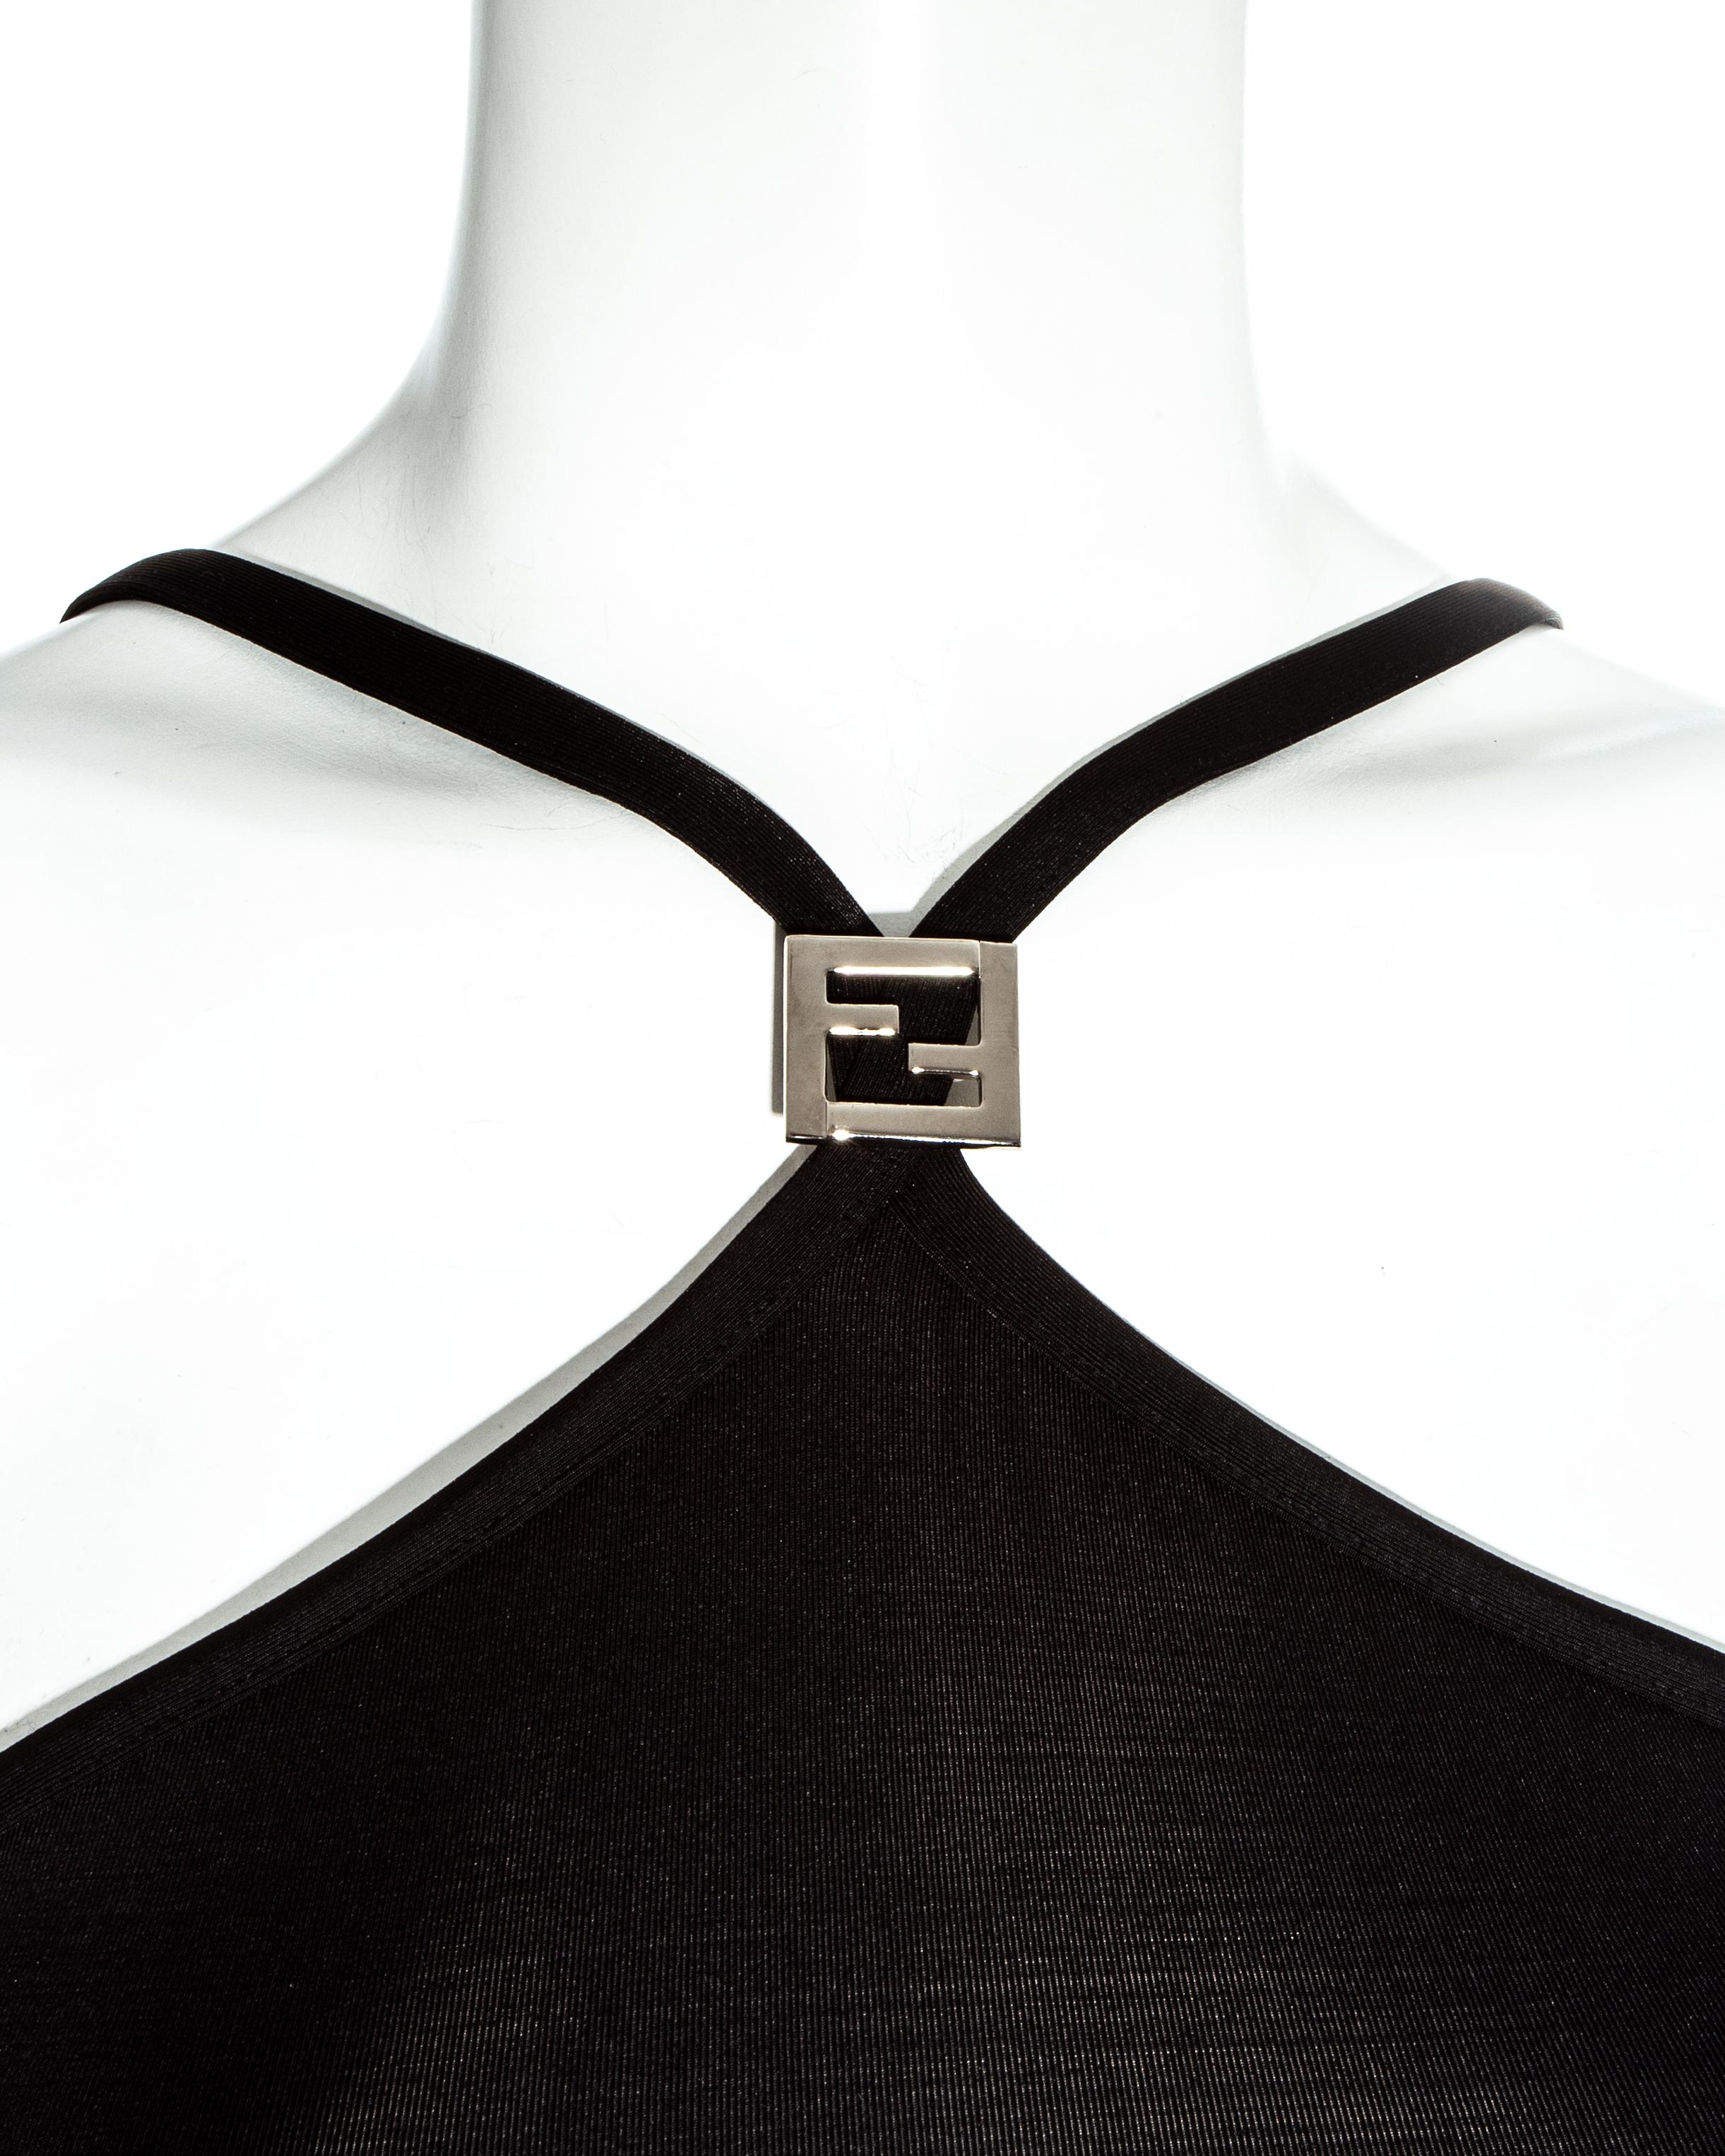 Fendi by Karl Lagerfeld; black lycra figure hugging maxi dress with silver metal Fendi logo

Spring-Summer 1997